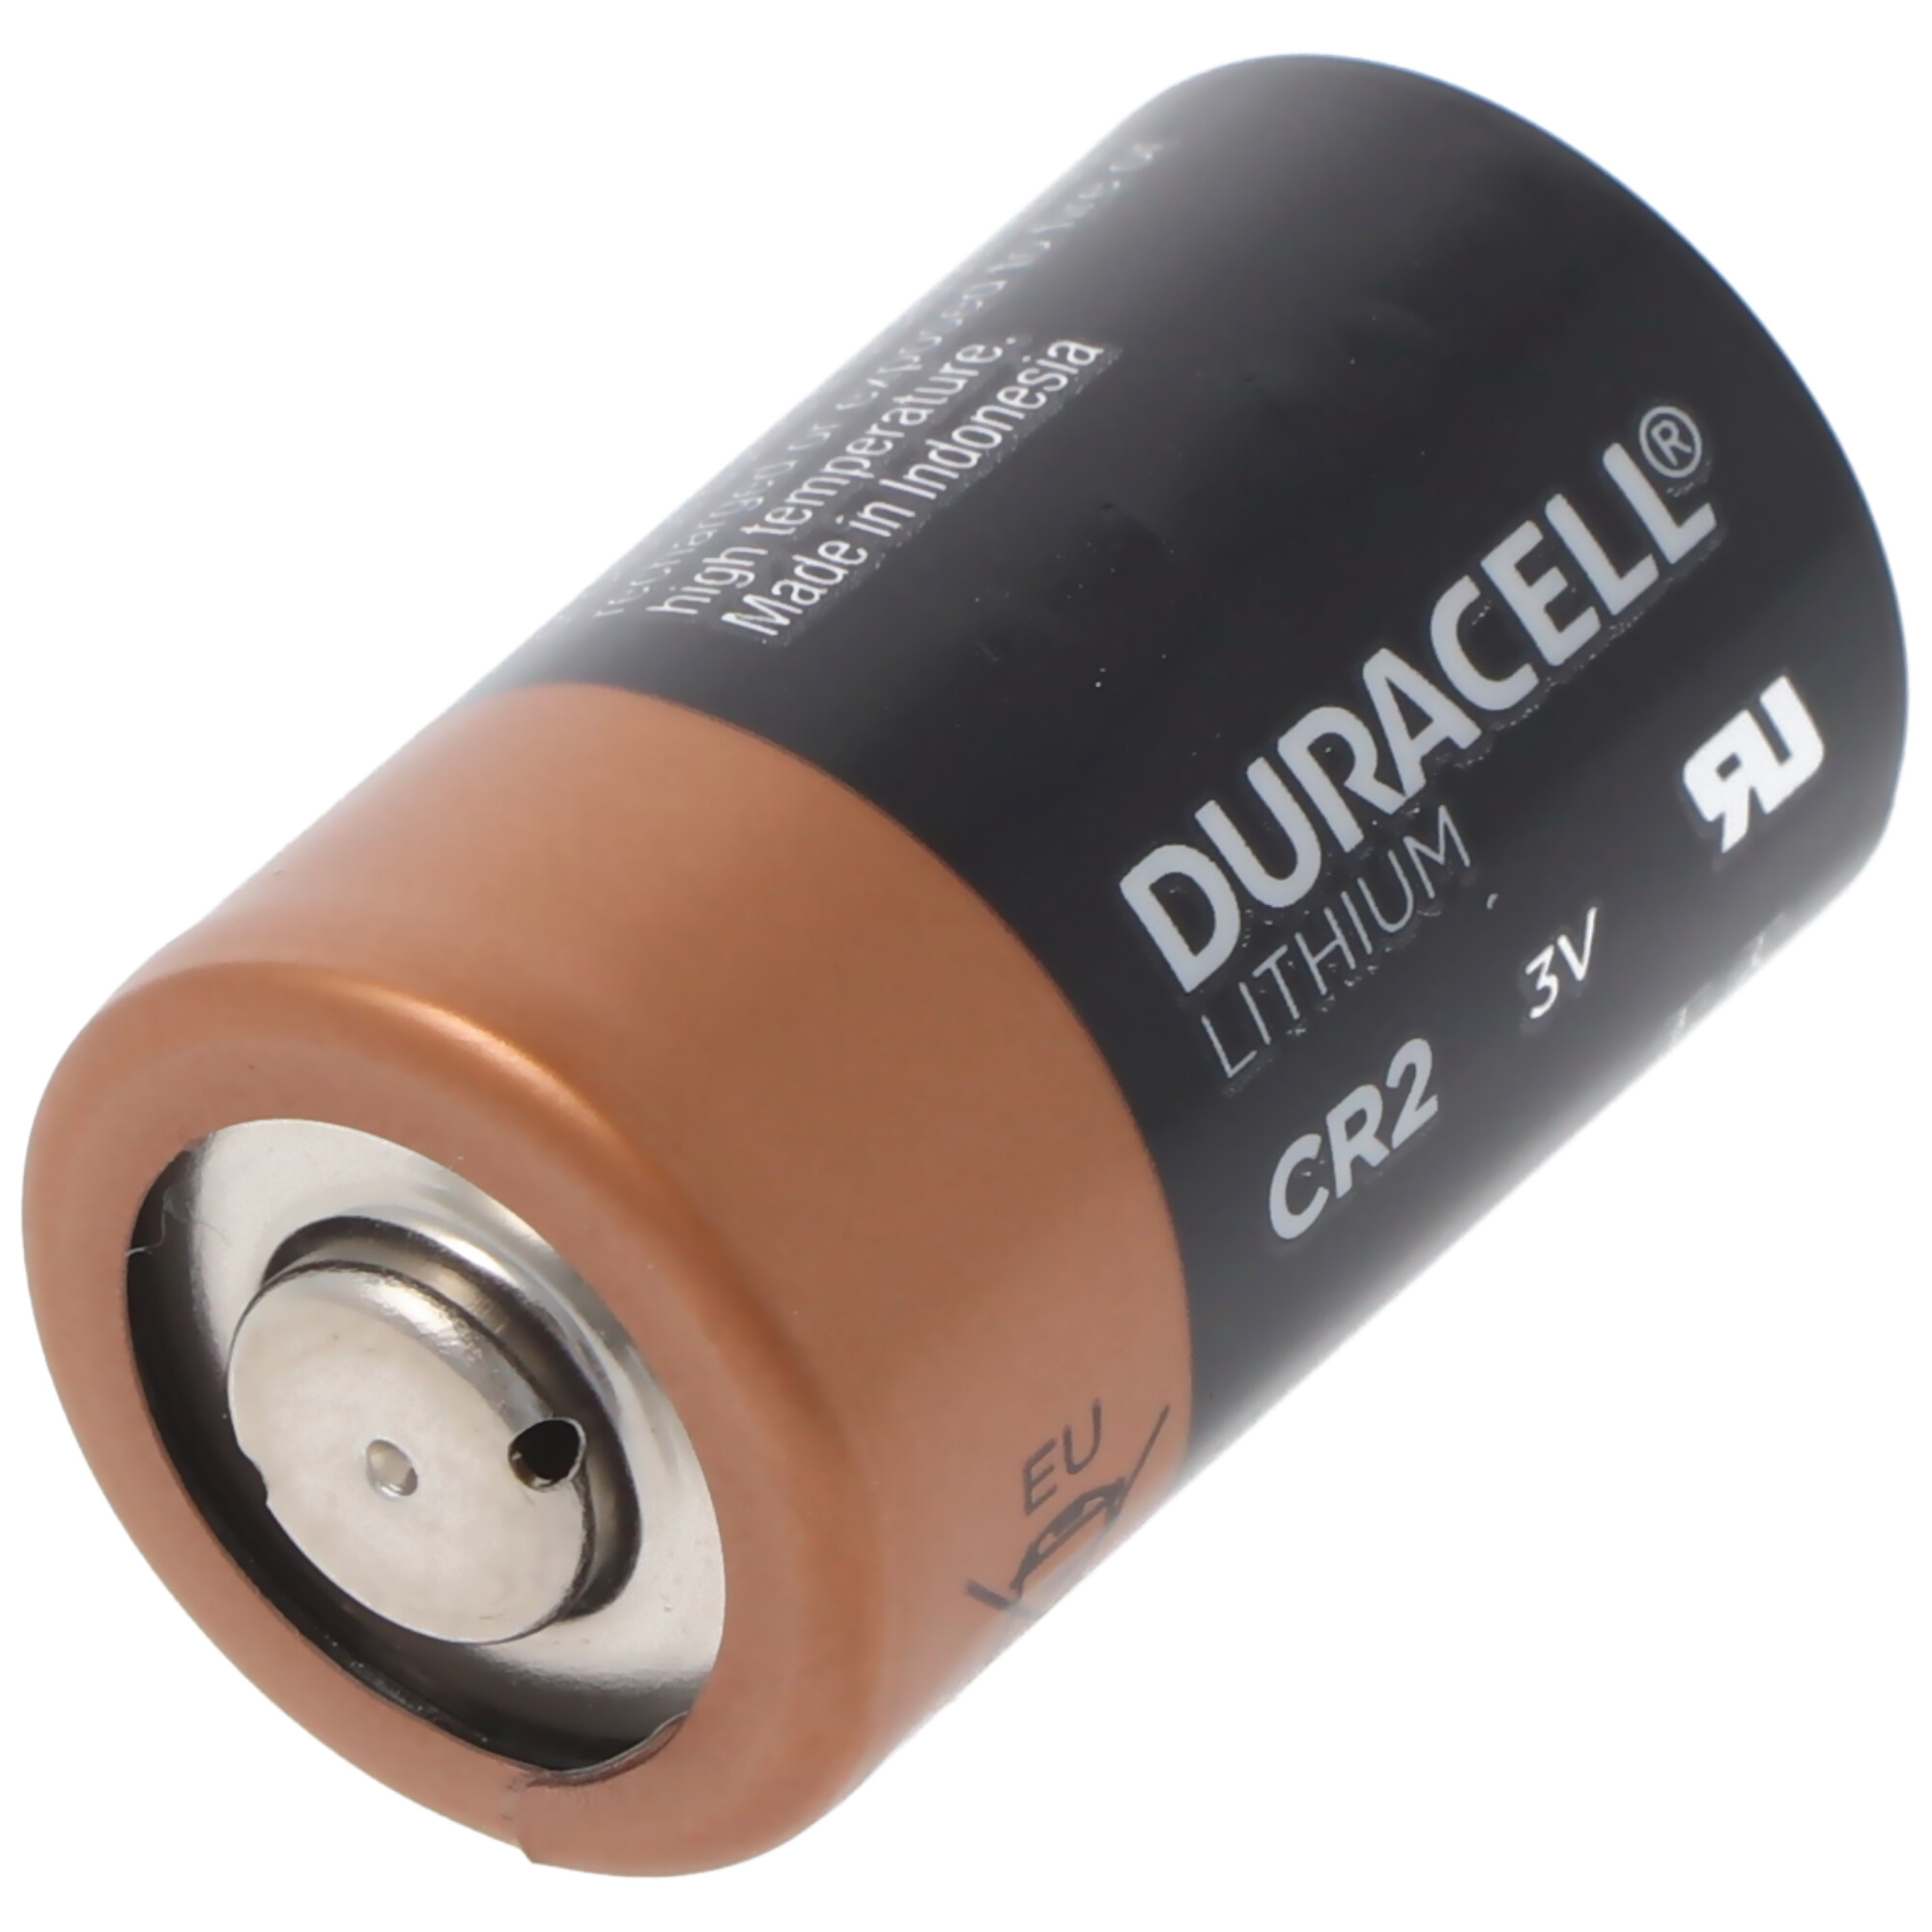 Batterie passend für Osram Lightify Motion Sensor Bewegungsmelder 1x Duracell CR2 Lithium Batterie